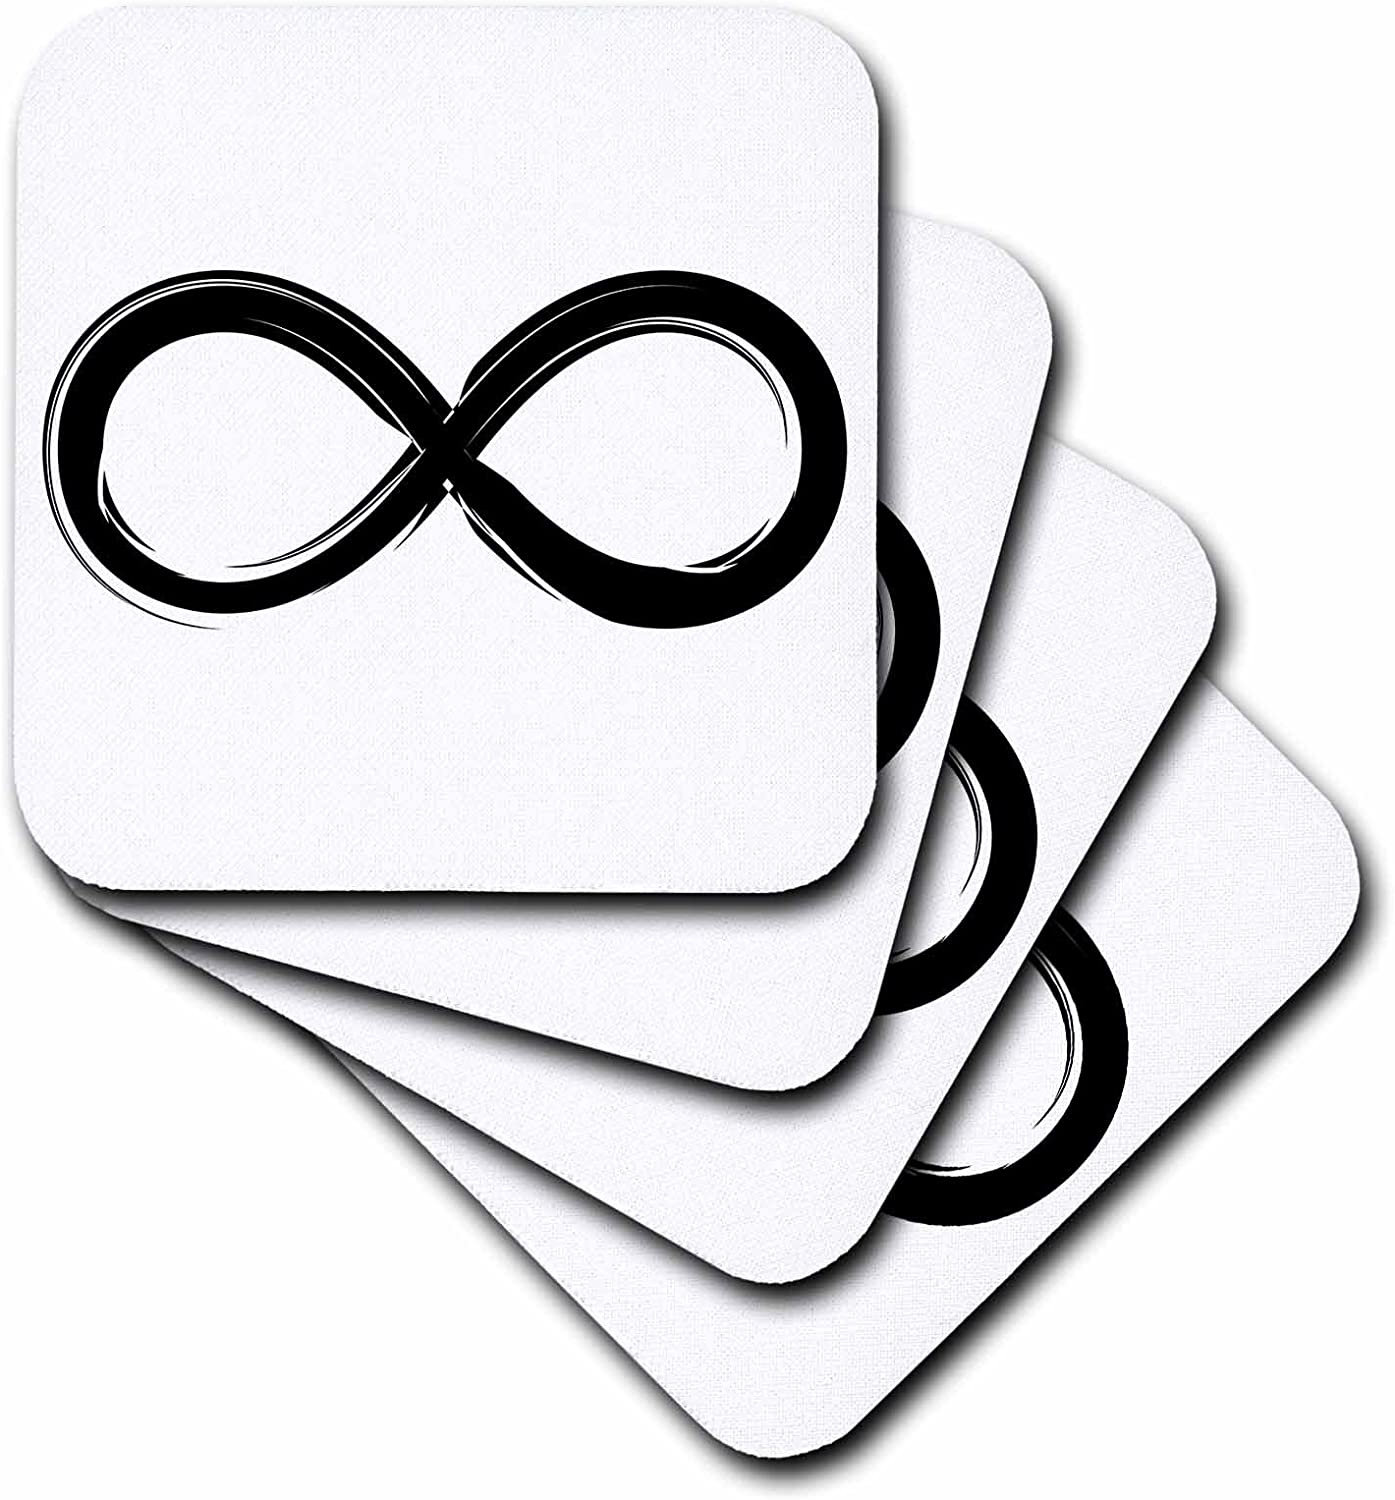 3dRose CST_24235_3 Infinity Symbol on White Background Ceramic Tile Coasters, Set of 4